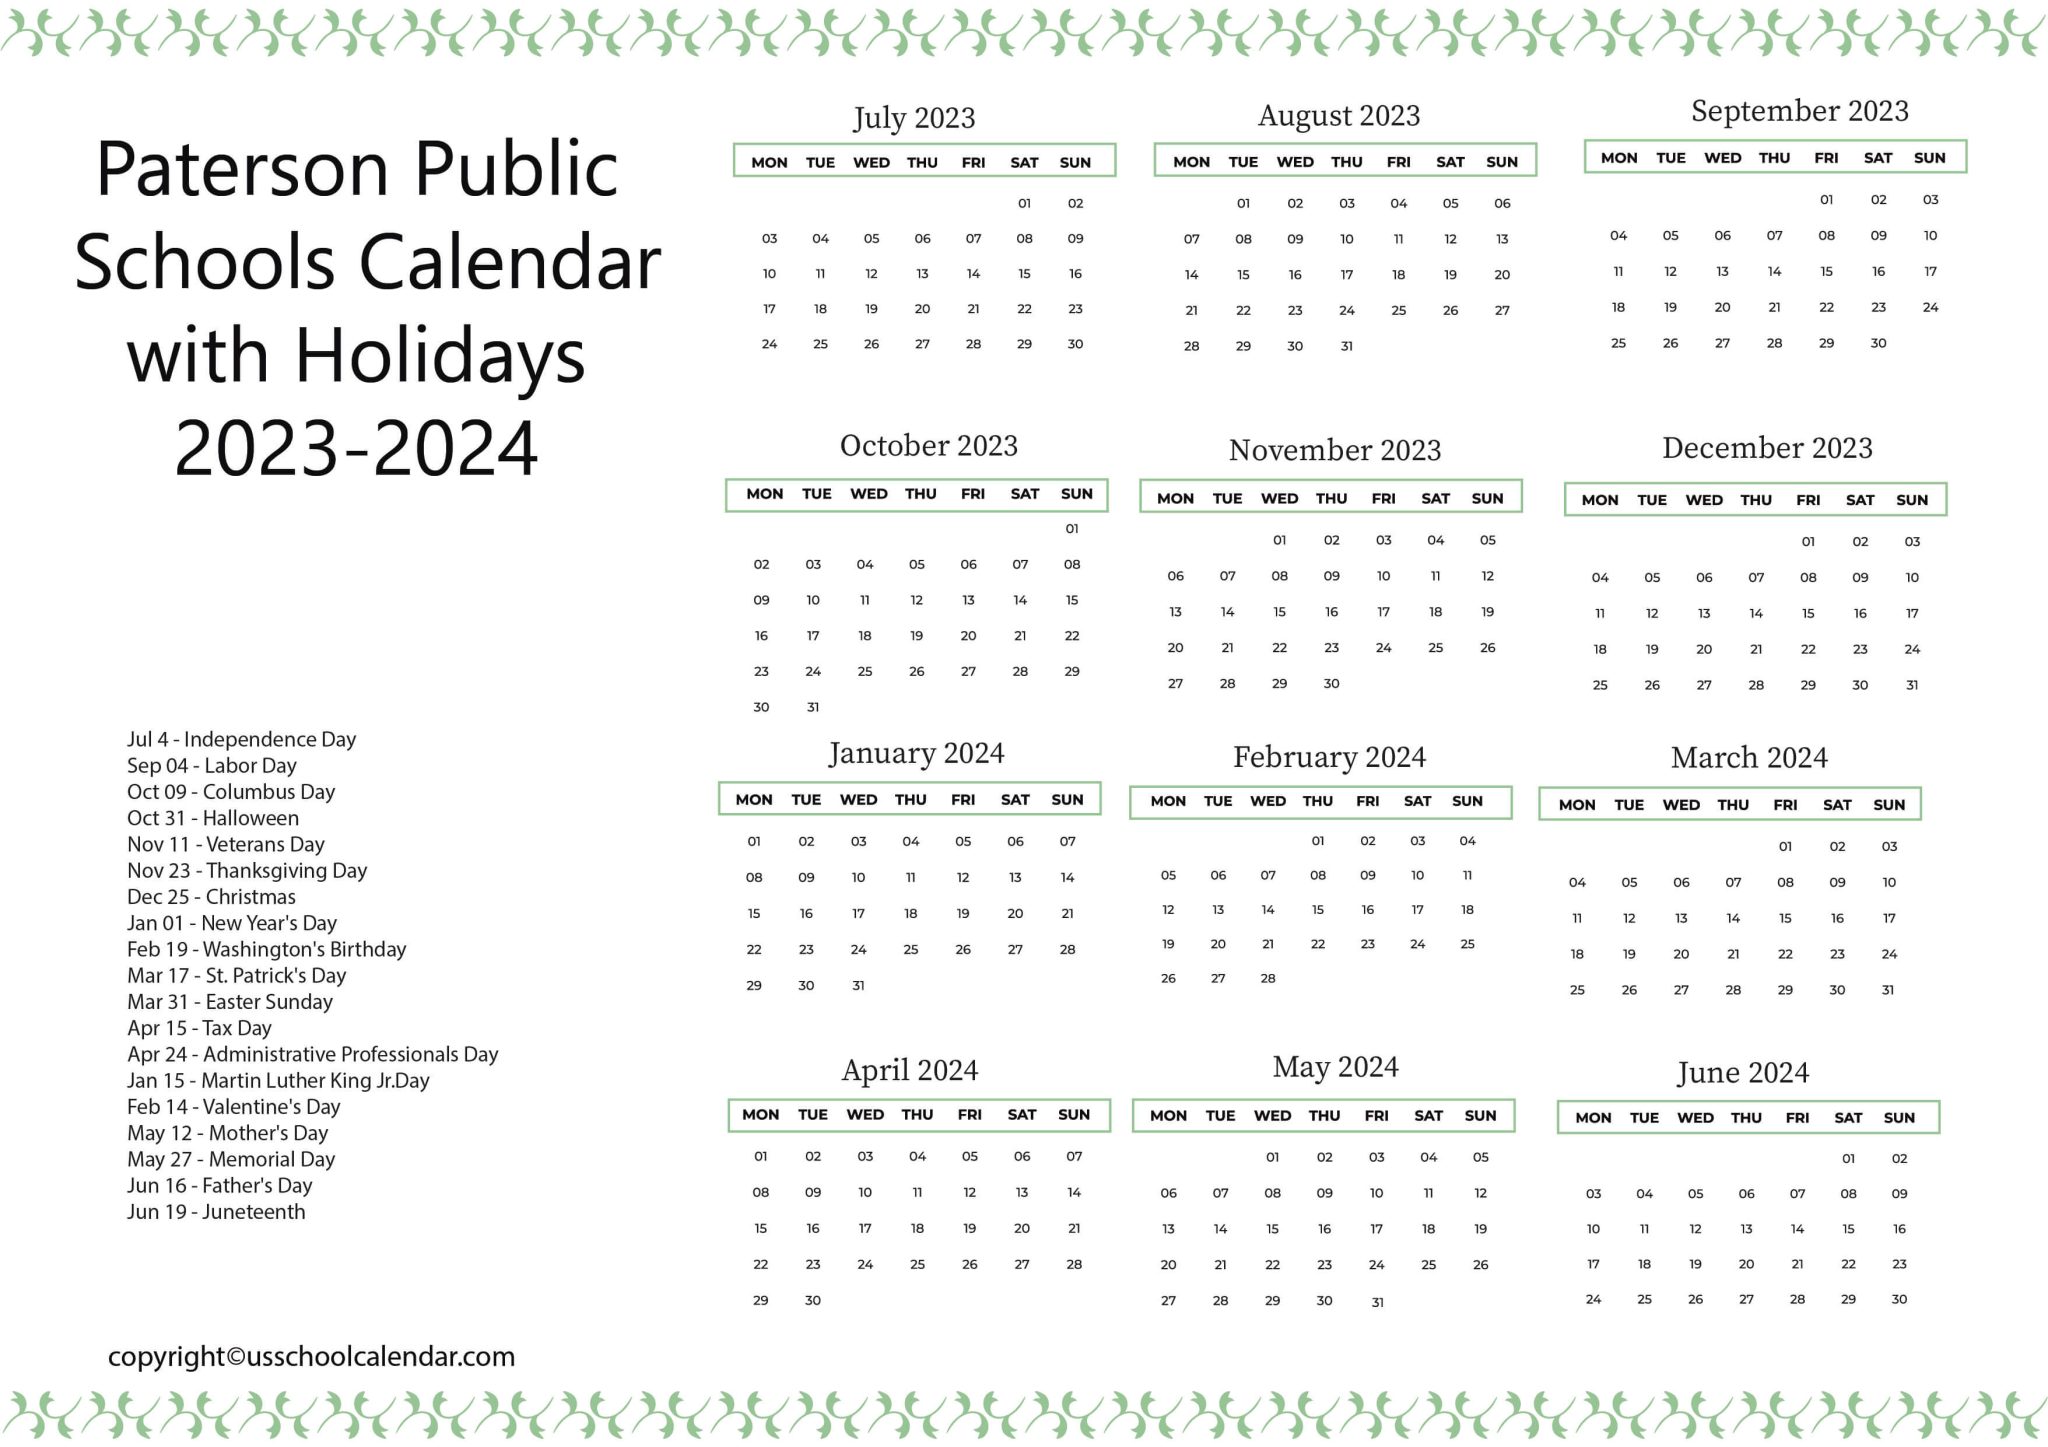 Paterson Public Schools Calendar with Holidays 2023-2024